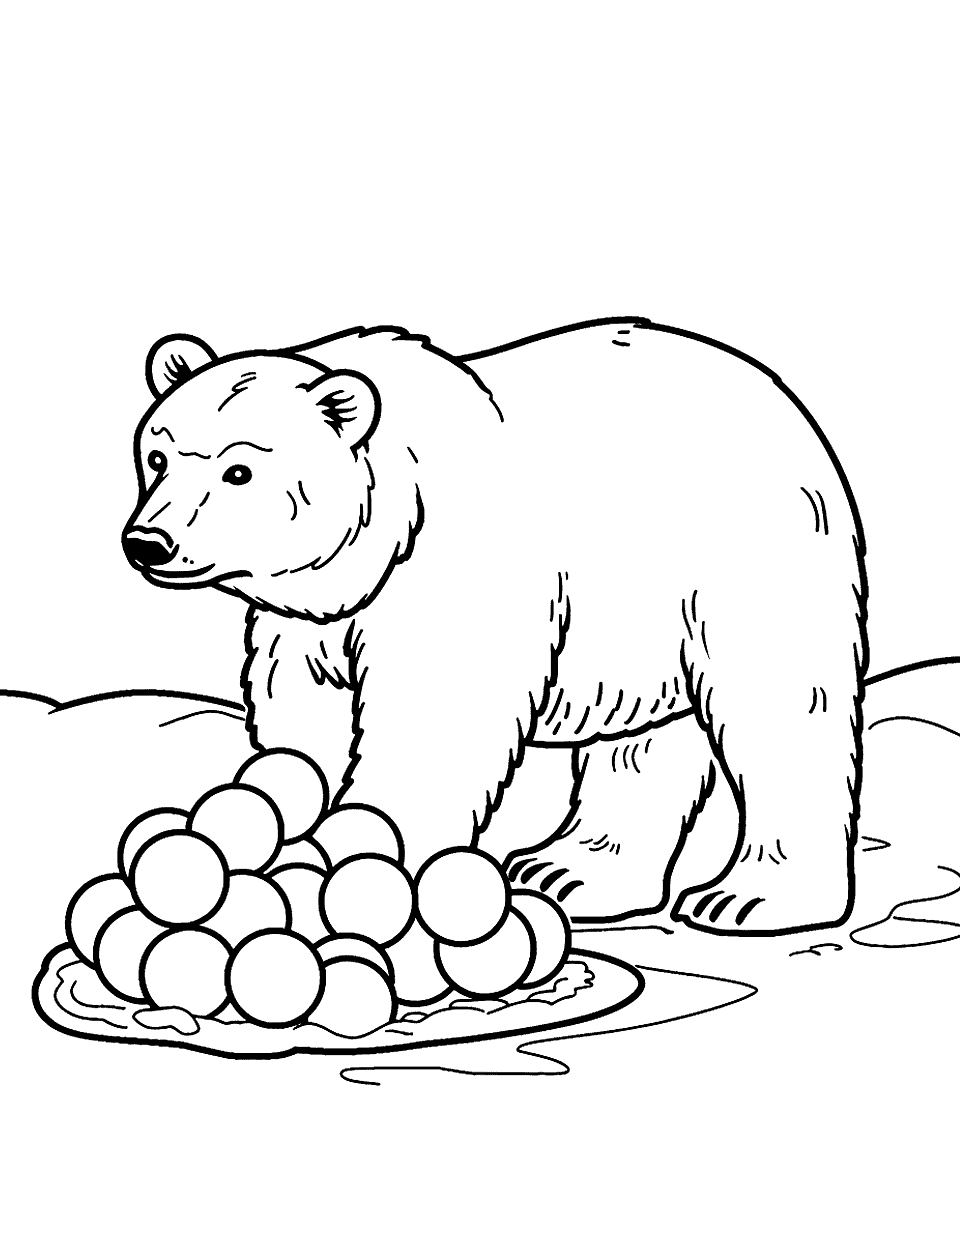 Polar Bear with Snowball Pile Coloring Page - A polar bear next to a pile of snowballs, ready for fun.